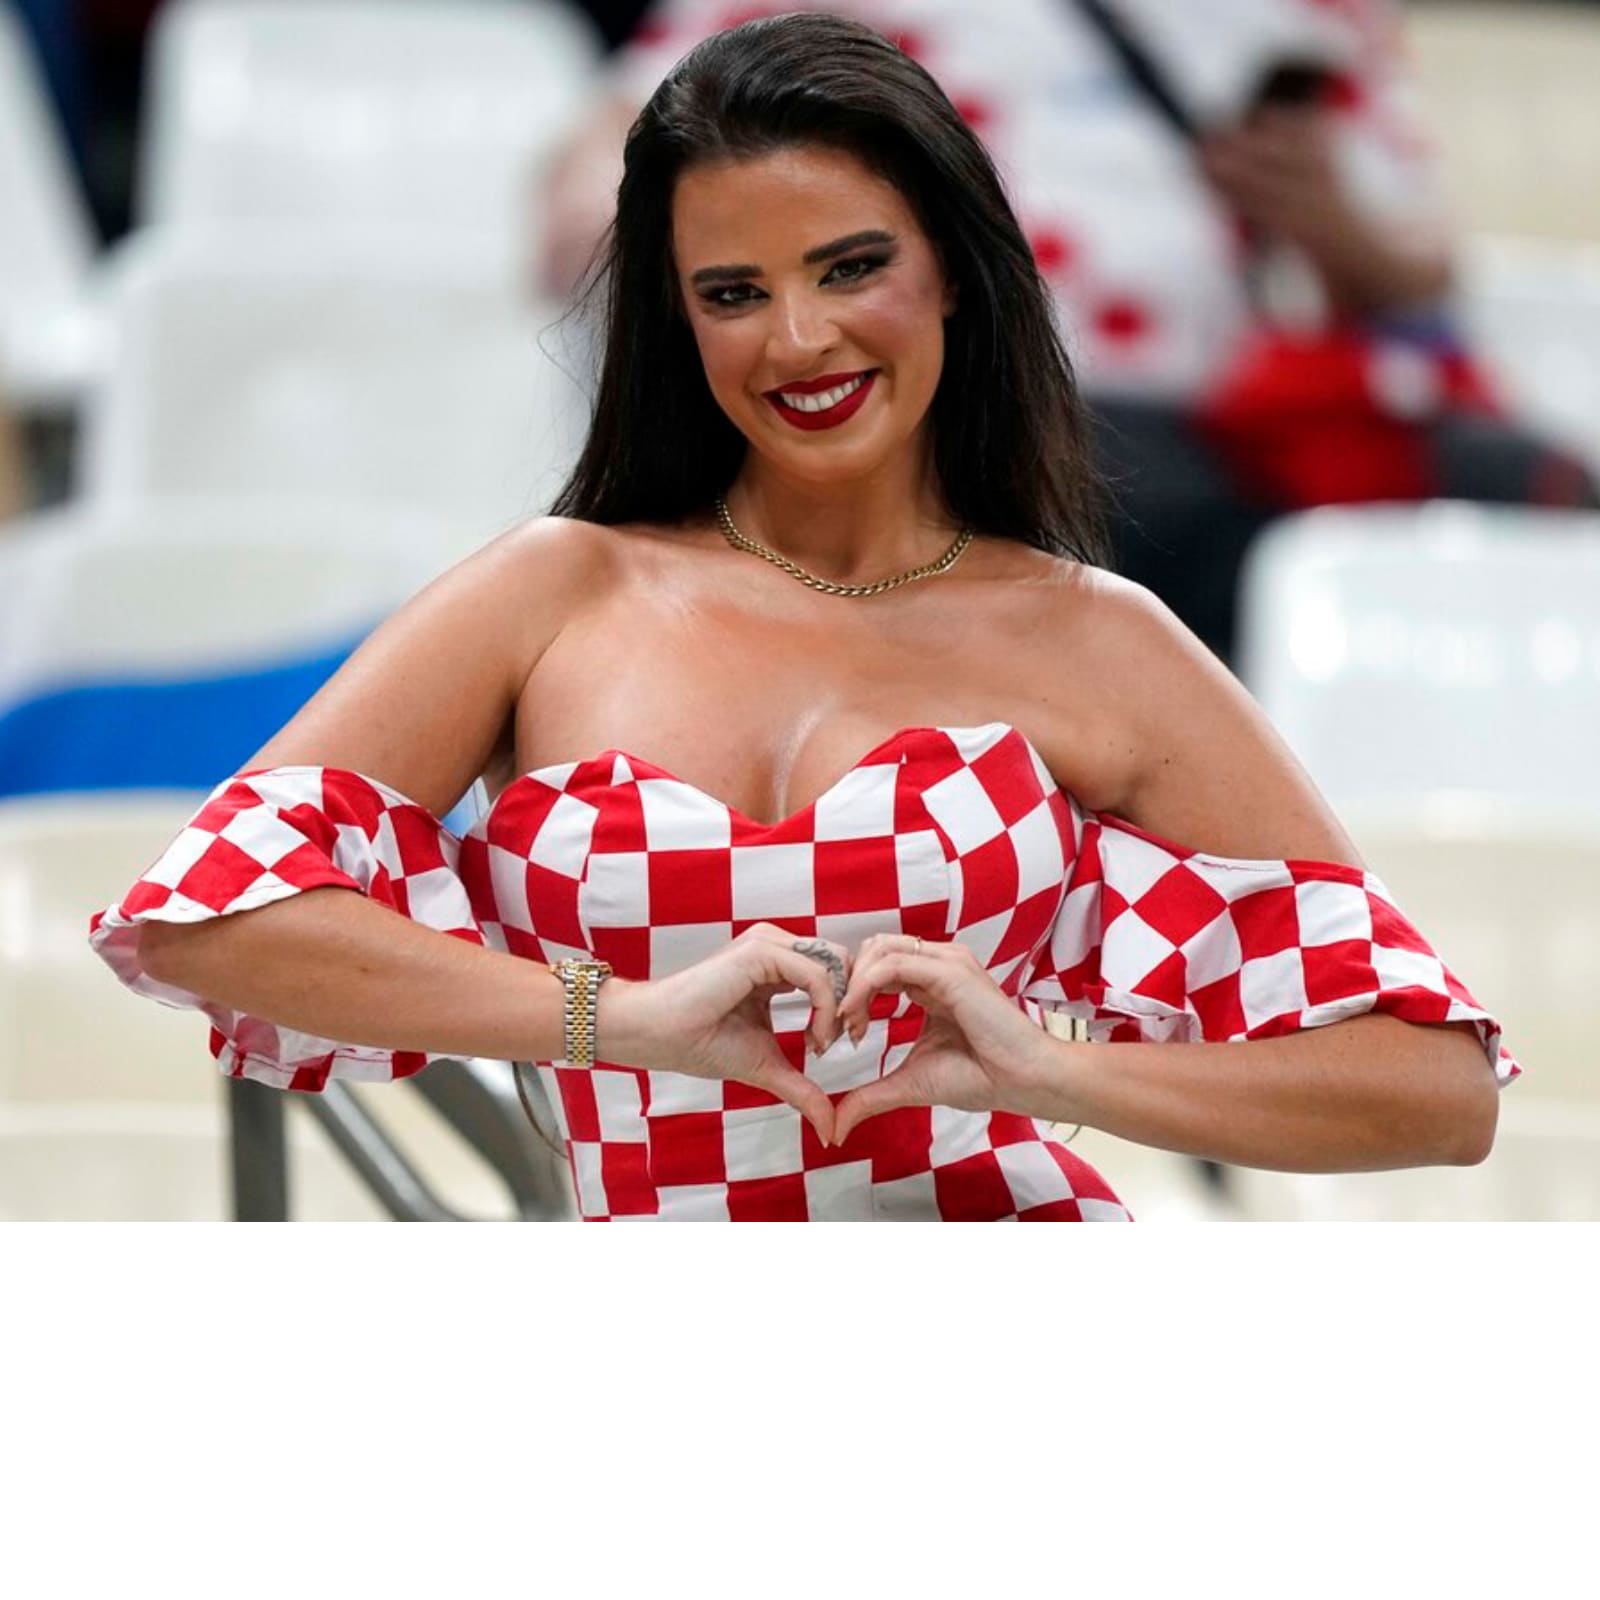 Ivana Knoll, Croatia fan and model who has been pushing the